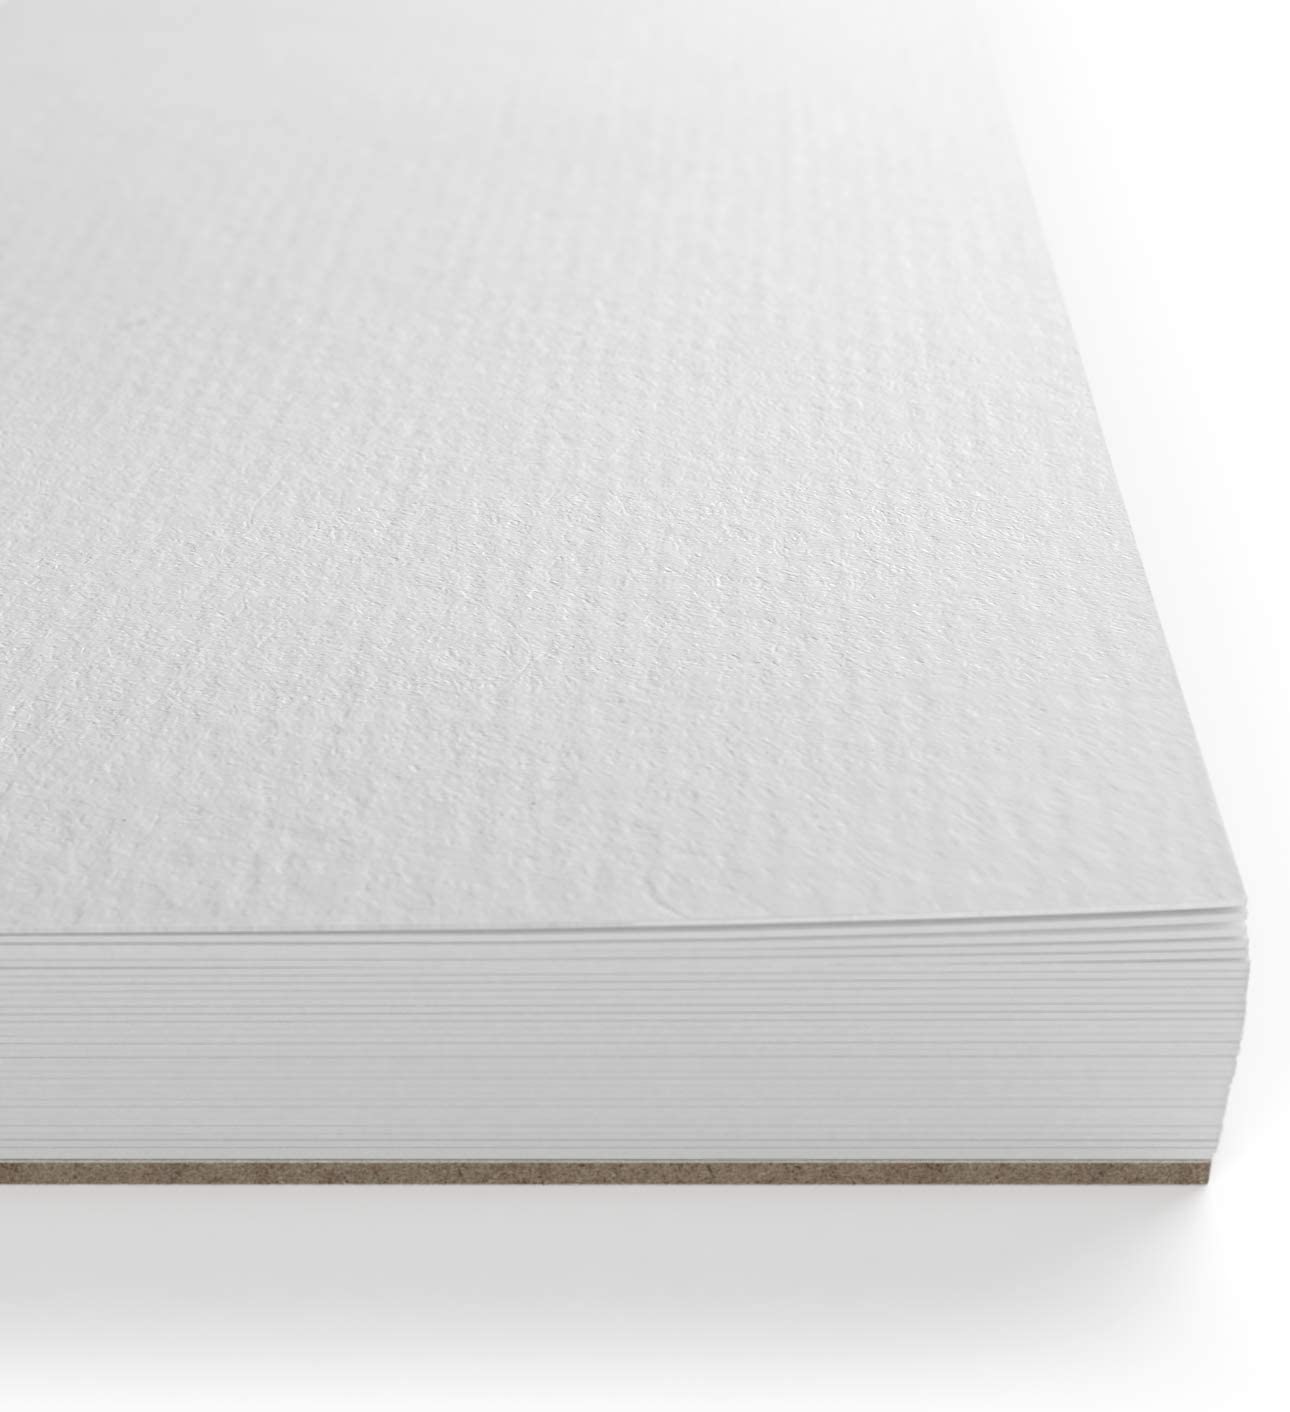 Arteza 9x12 Inches Marker Paper Pad, 2-Pack, 50 Sheets, Glue-Bound, Sm –  glytterati